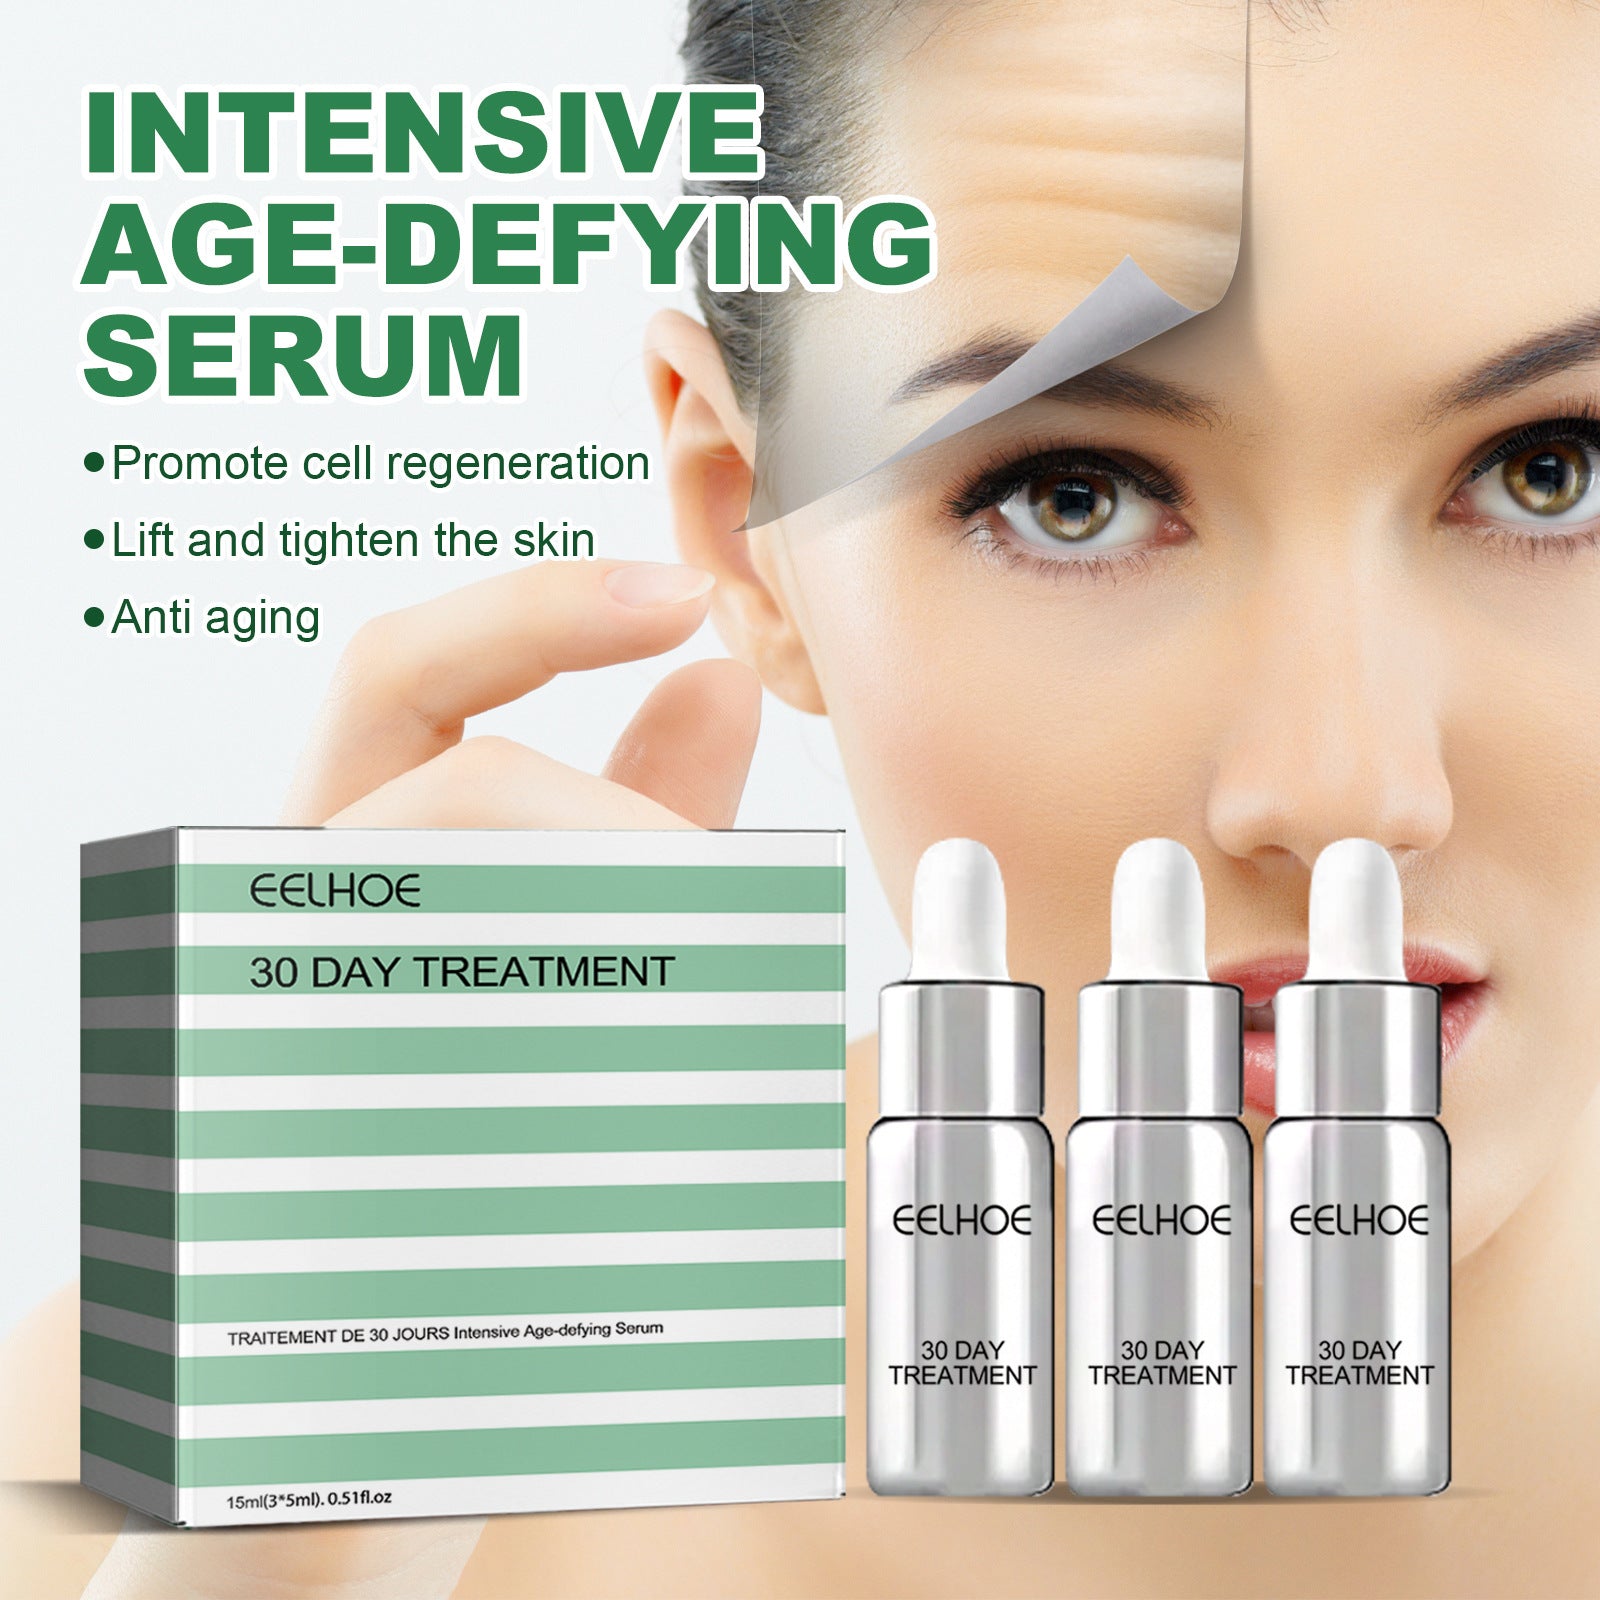 Anti-aging Essence Lighten fine lines, spots, dull skin, moisturize, firm and brighten facial essence